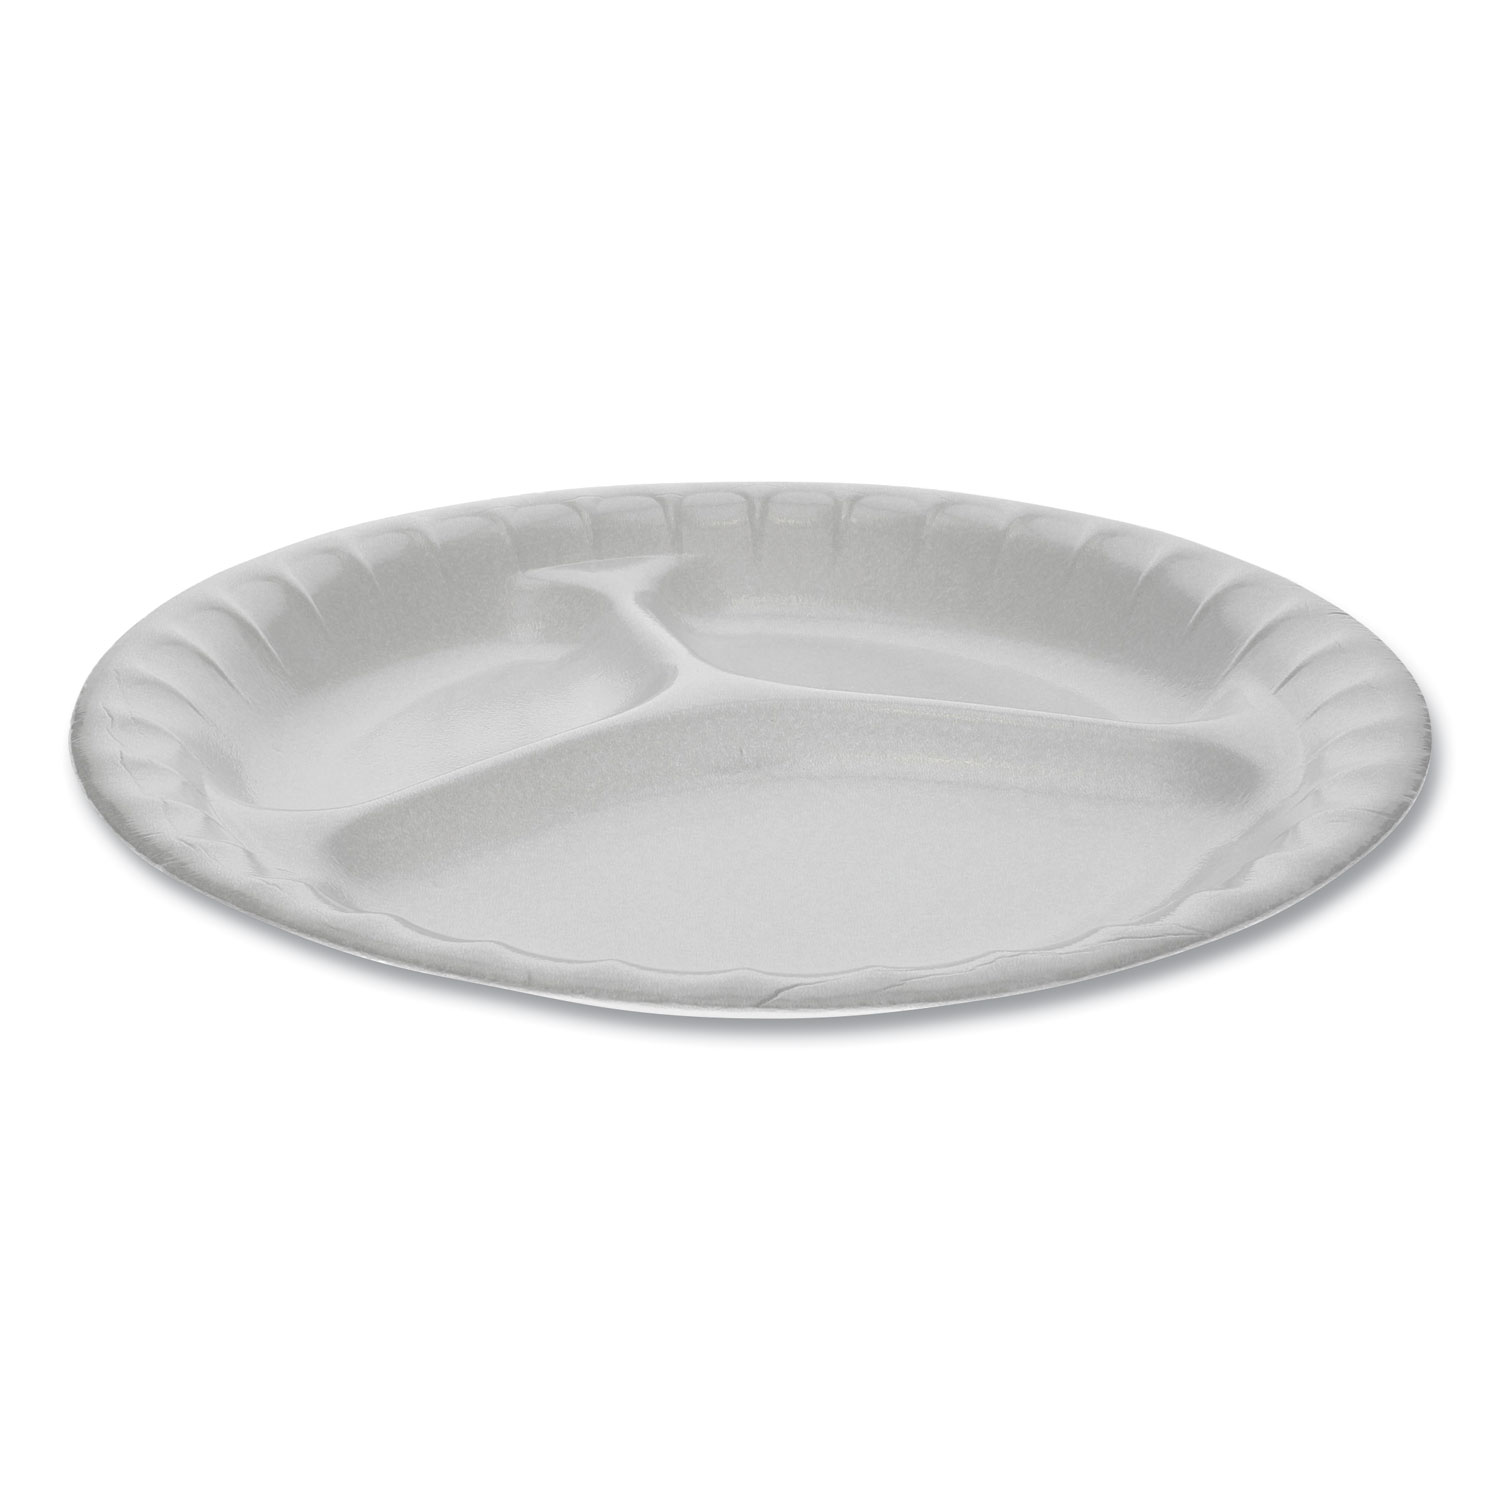  Pactiv 0TK100110000 Laminated Foam Dinnerware, 3-Compartment Plate, 8.88 Diameter, White, 500/Carton (PCT0TK100110000) 